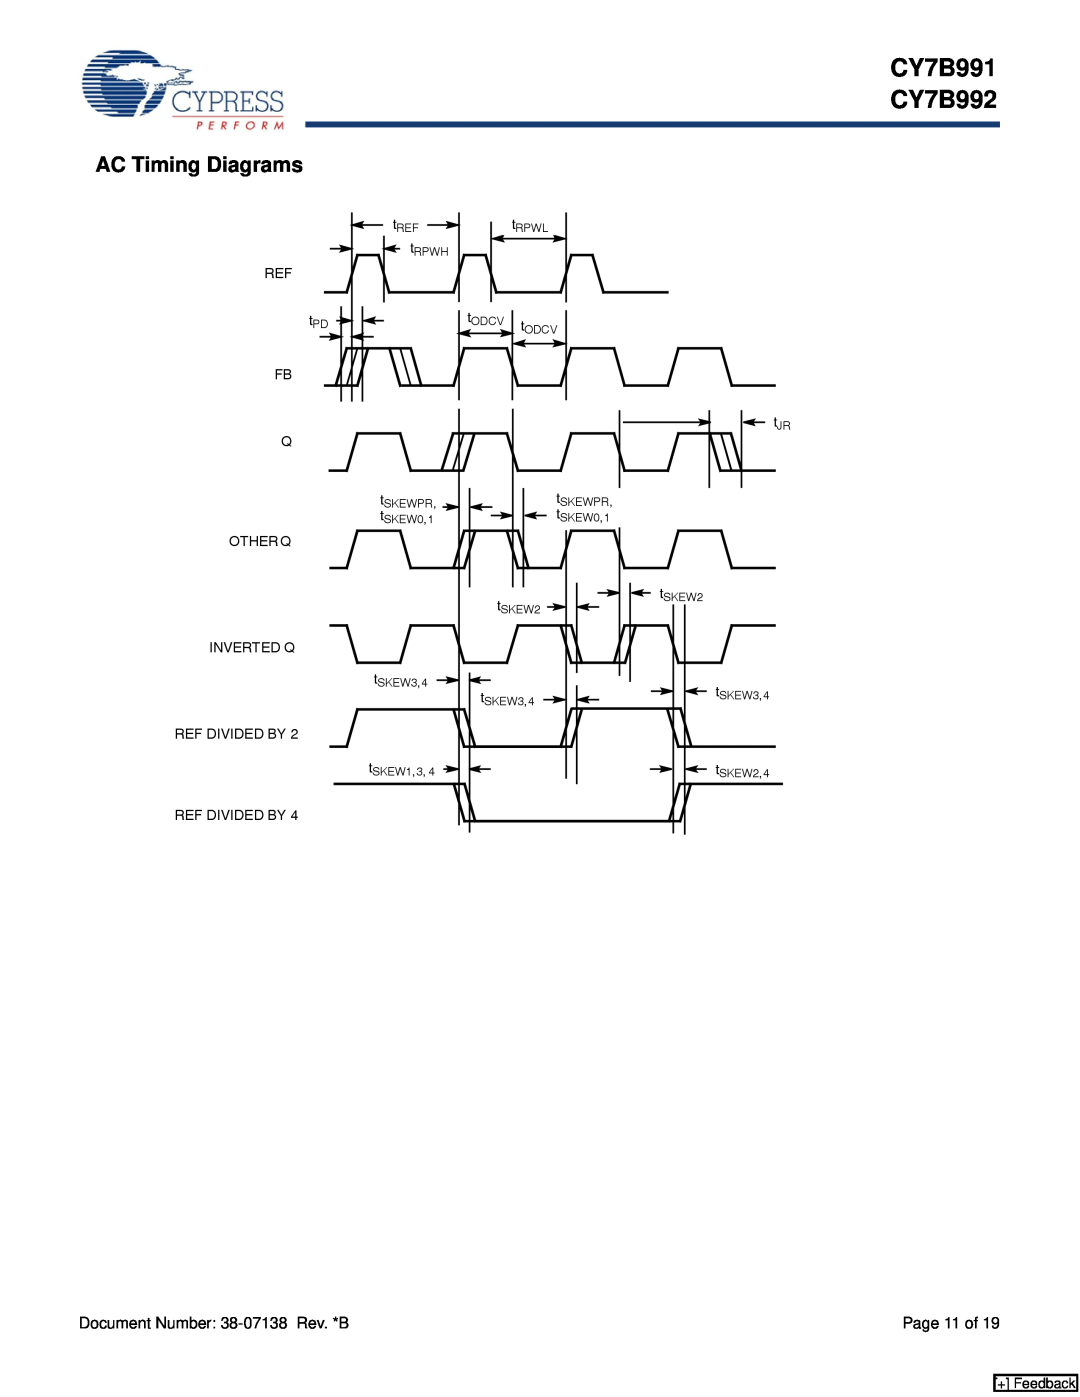 Cypress manual AC Timing Diagrams, CY7B991 CY7B992, Page 11 of, + Feedback 